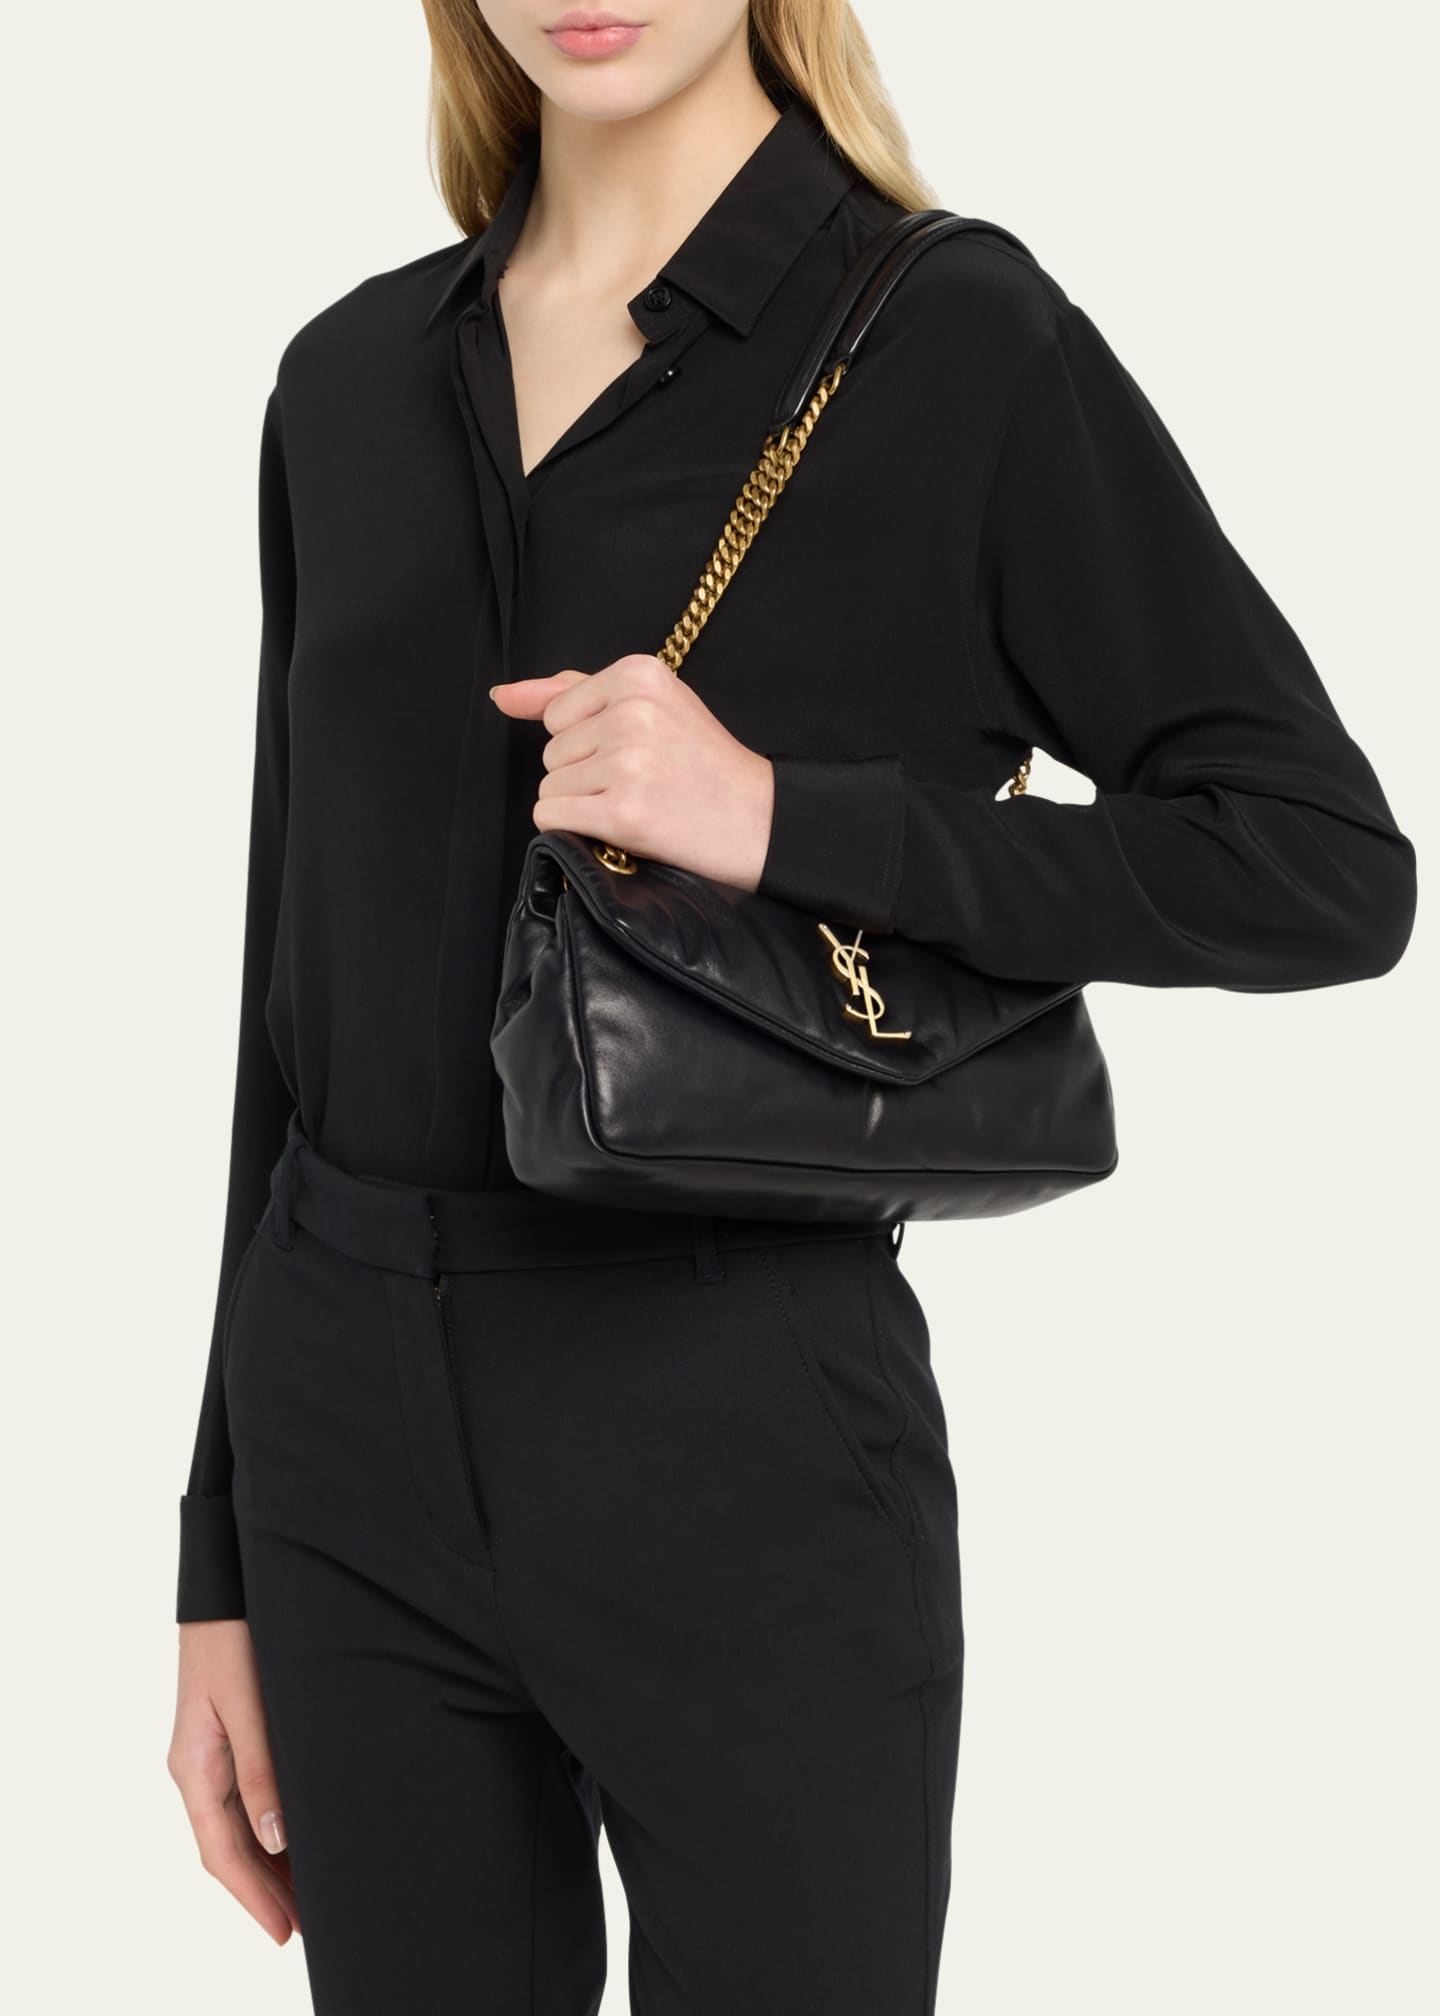 Saint Laurent Calypso YSL Leather Chain Shoulder Bag - Bergdorf Goodman